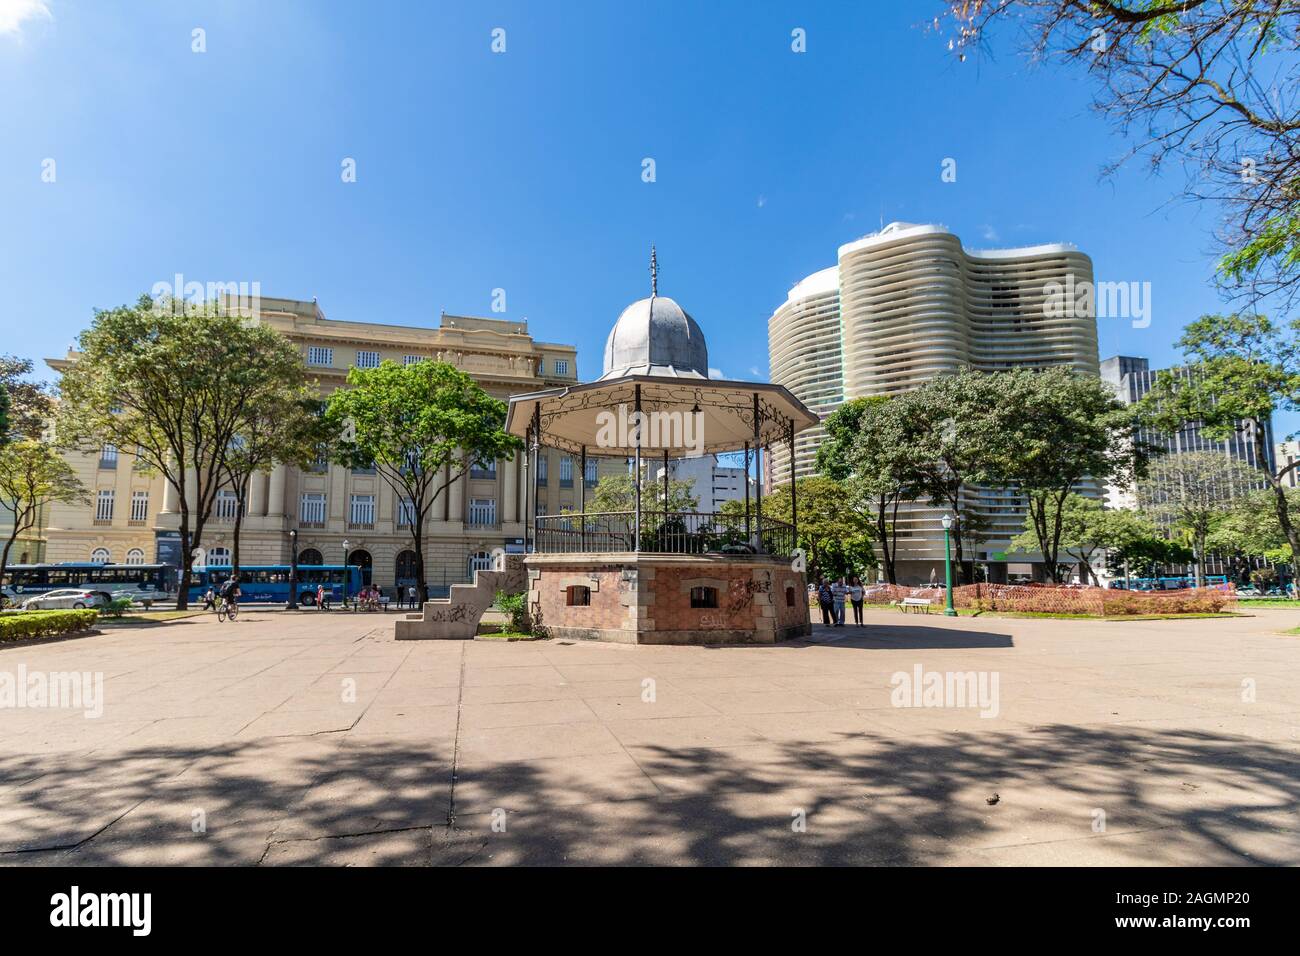 Scenes from Praça da Liberdade in the city of Belo Horizonte, capital of the state of Minas Gerais, Brazil Stock Photo